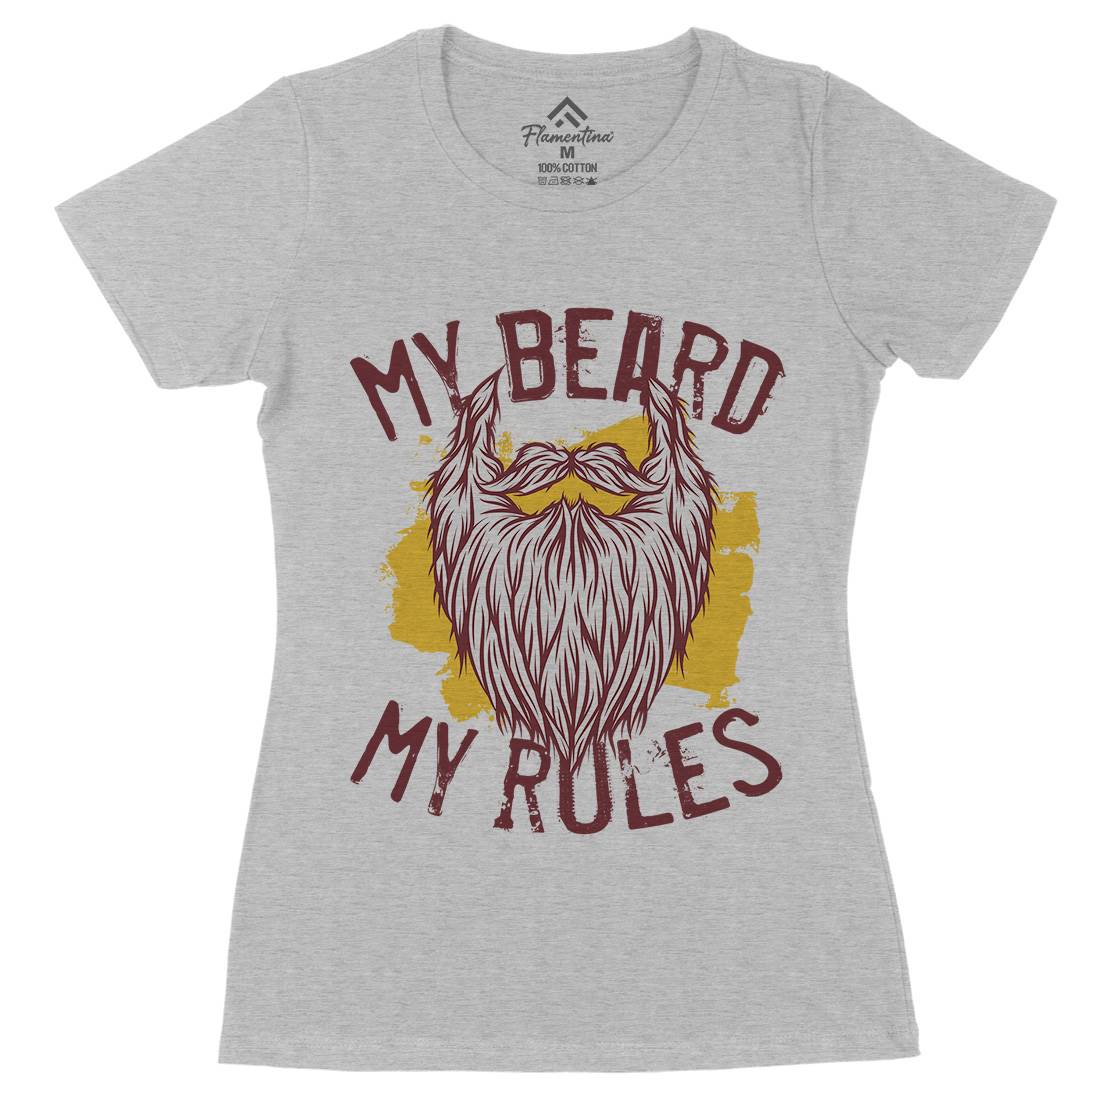 My Beard Rules Womens Organic Crew Neck T-Shirt Barber C808